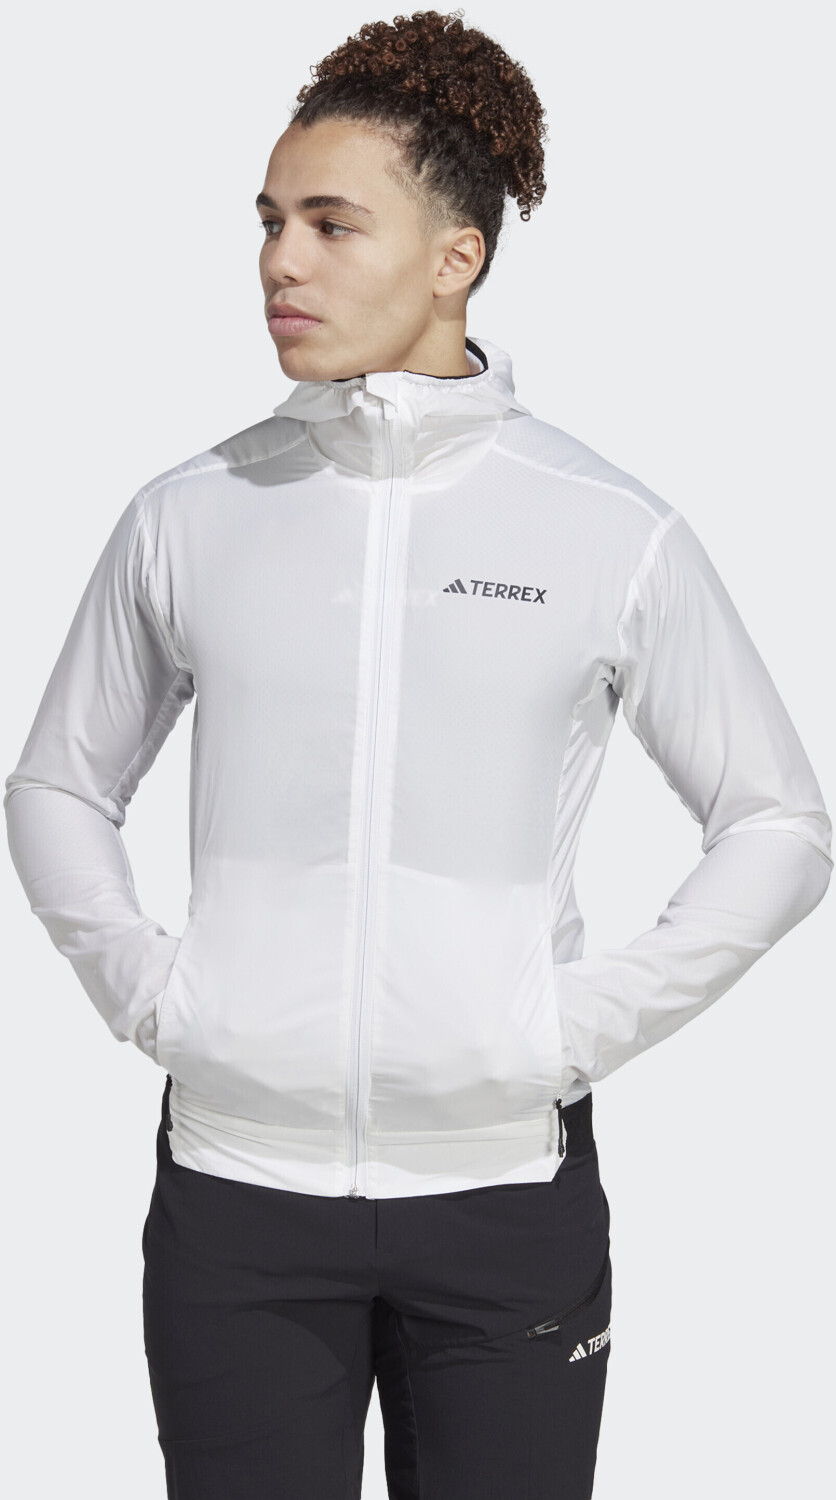 Deals Xperior £42.50 (Today) Windweave Best – Adidas TERREX Buy on Man Jacket Wind from